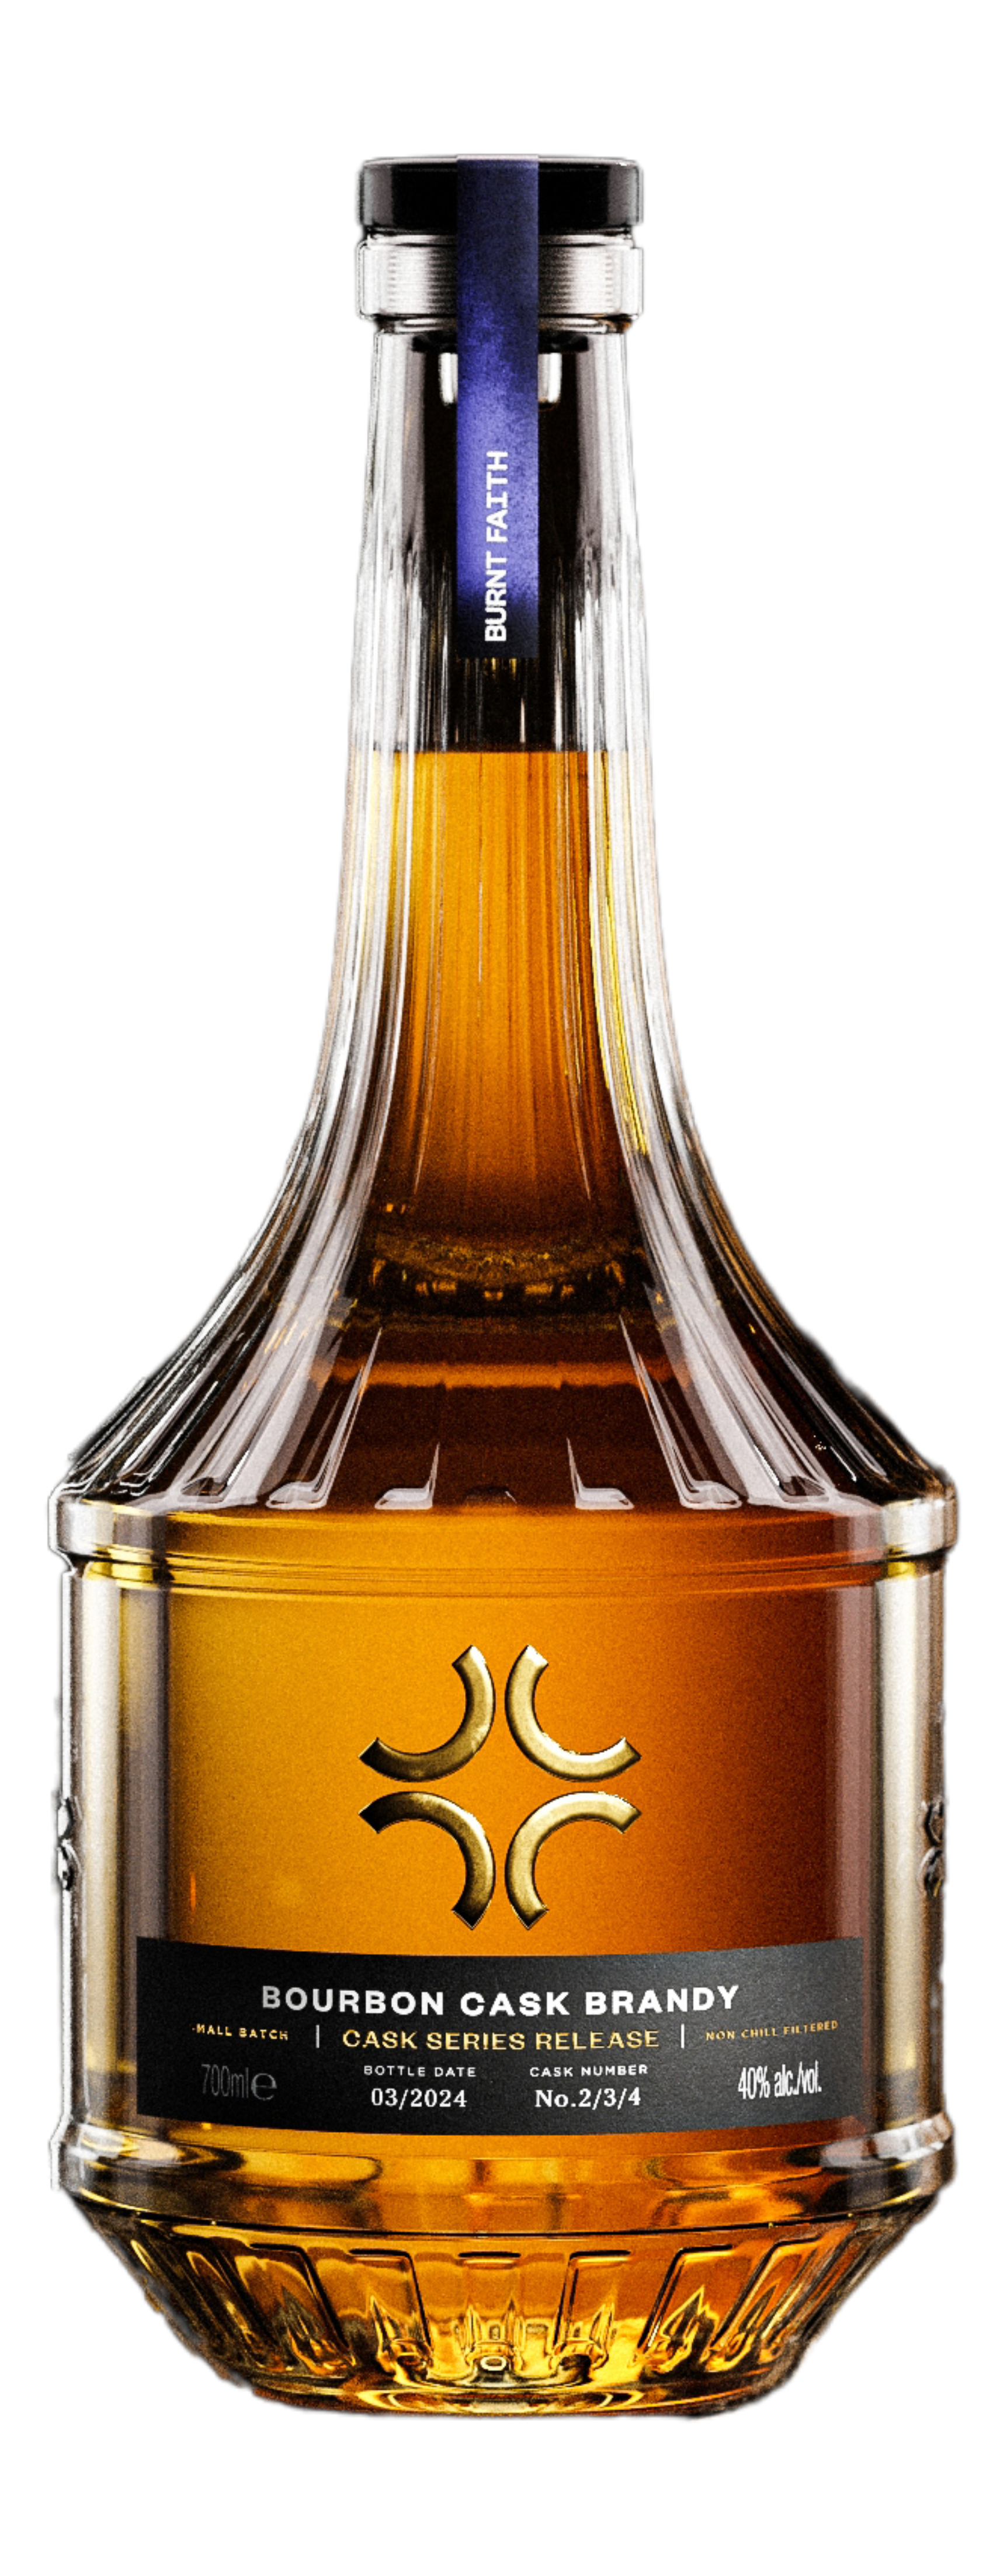 Bourbon cask brandy transparent